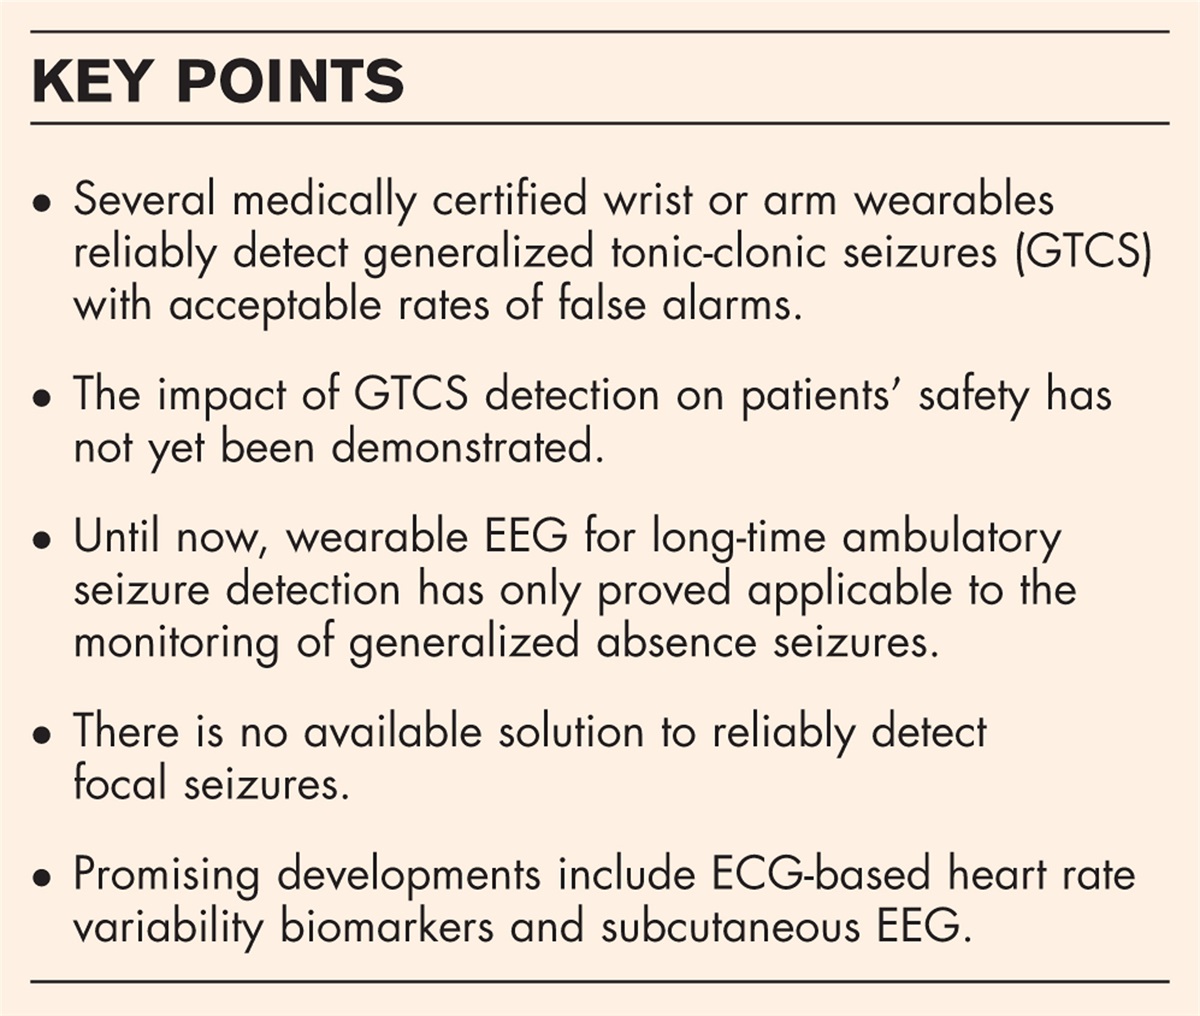 Ambulatory seizure detection